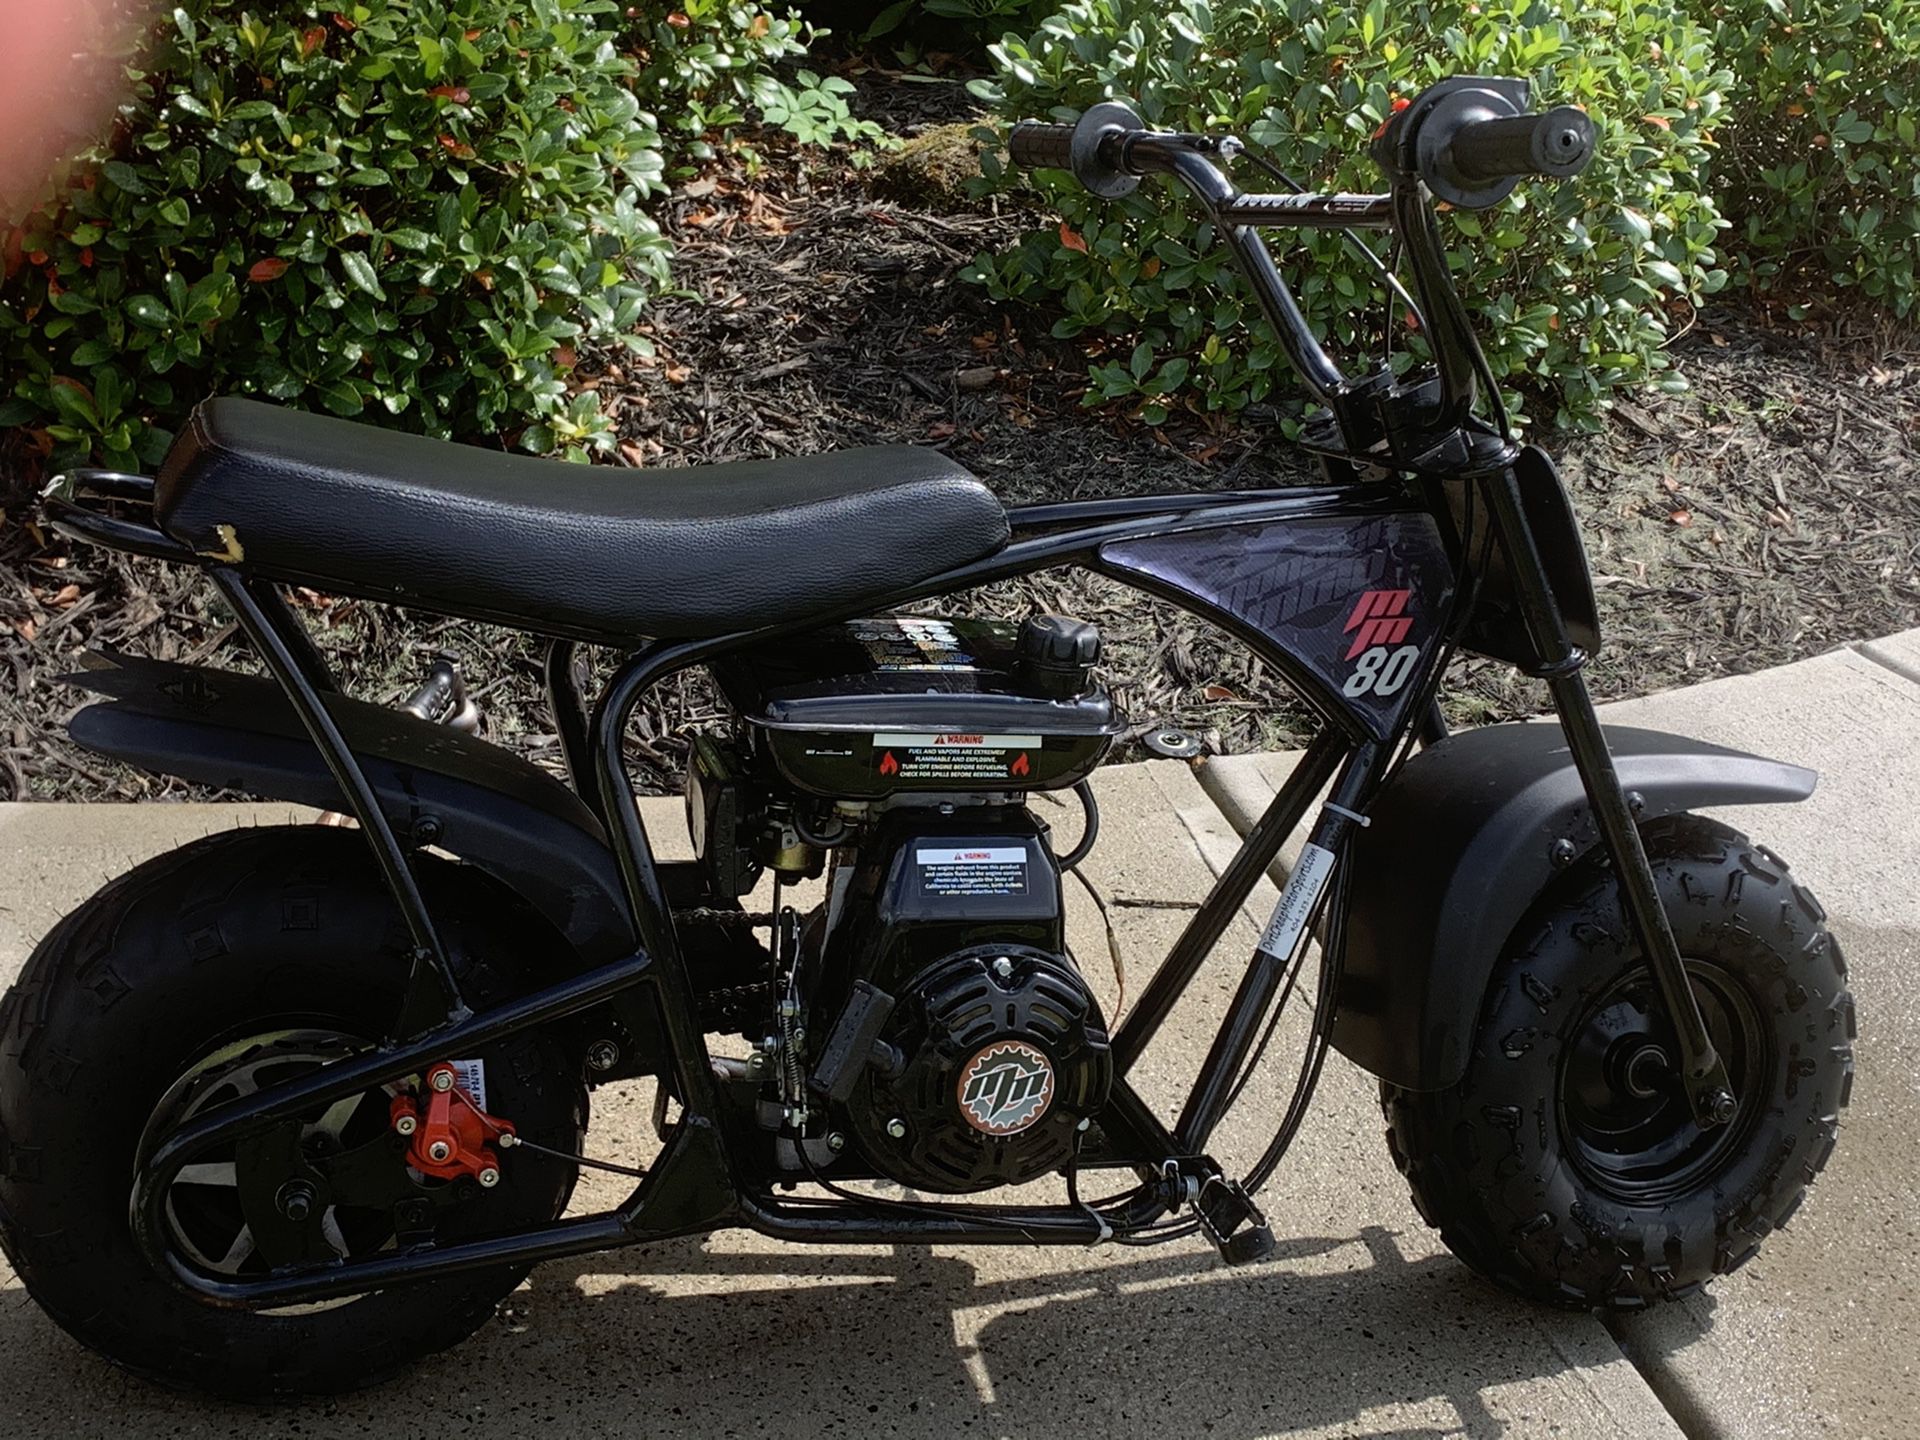 Mini Moto 80cc mini bike for sale $250 obo